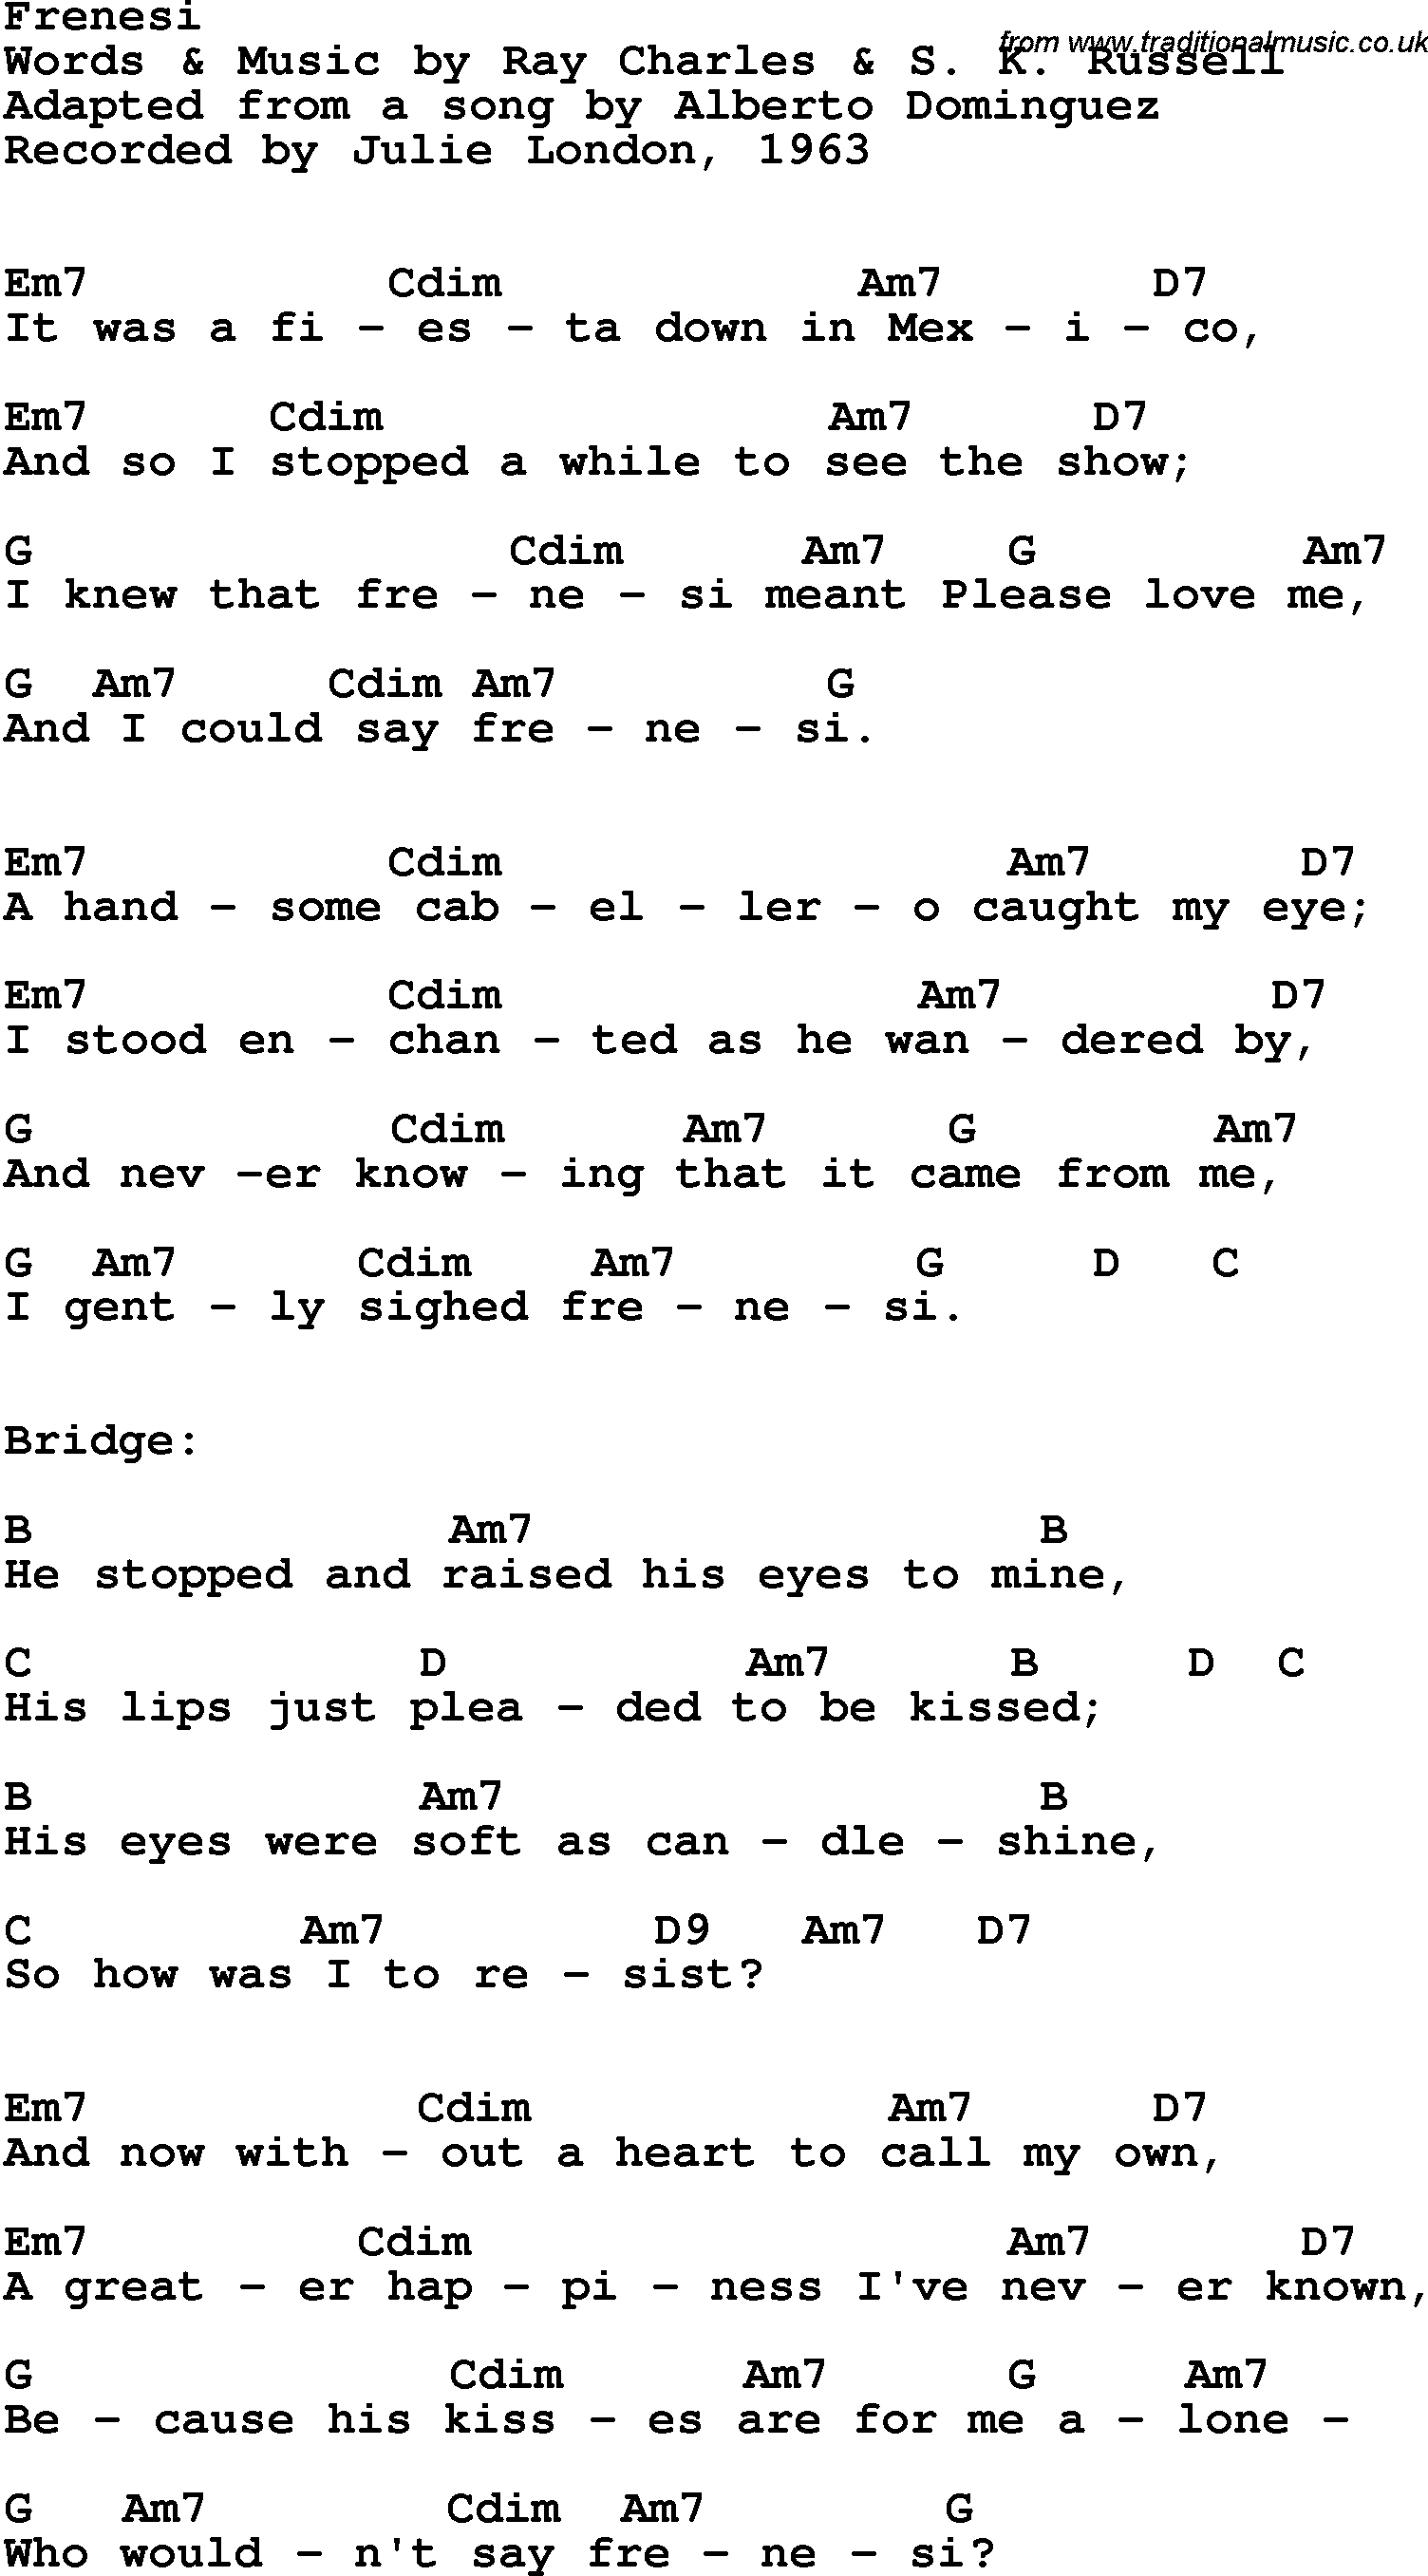 Song Lyrics with guitar chords for Frenesi - Julie London, 1963